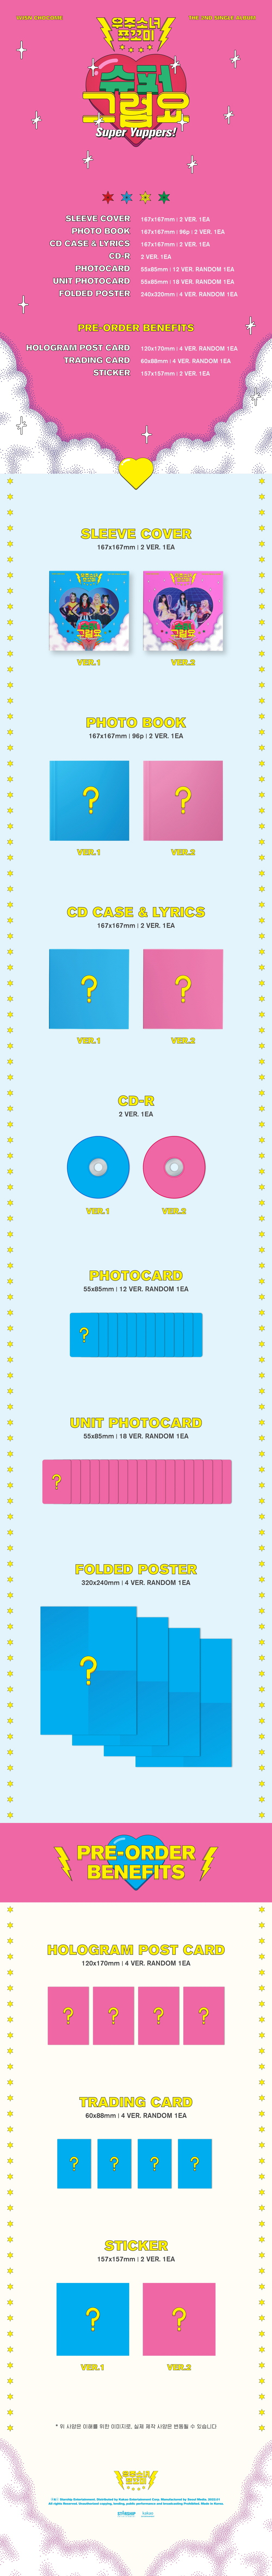 WJSN CHOCOME - [Super Yuppers!] / 2nd Single Album WJSN CHOCOME Super Yuppers! WJSNalbum WJSN CHOCOME album photobook photocard kpop